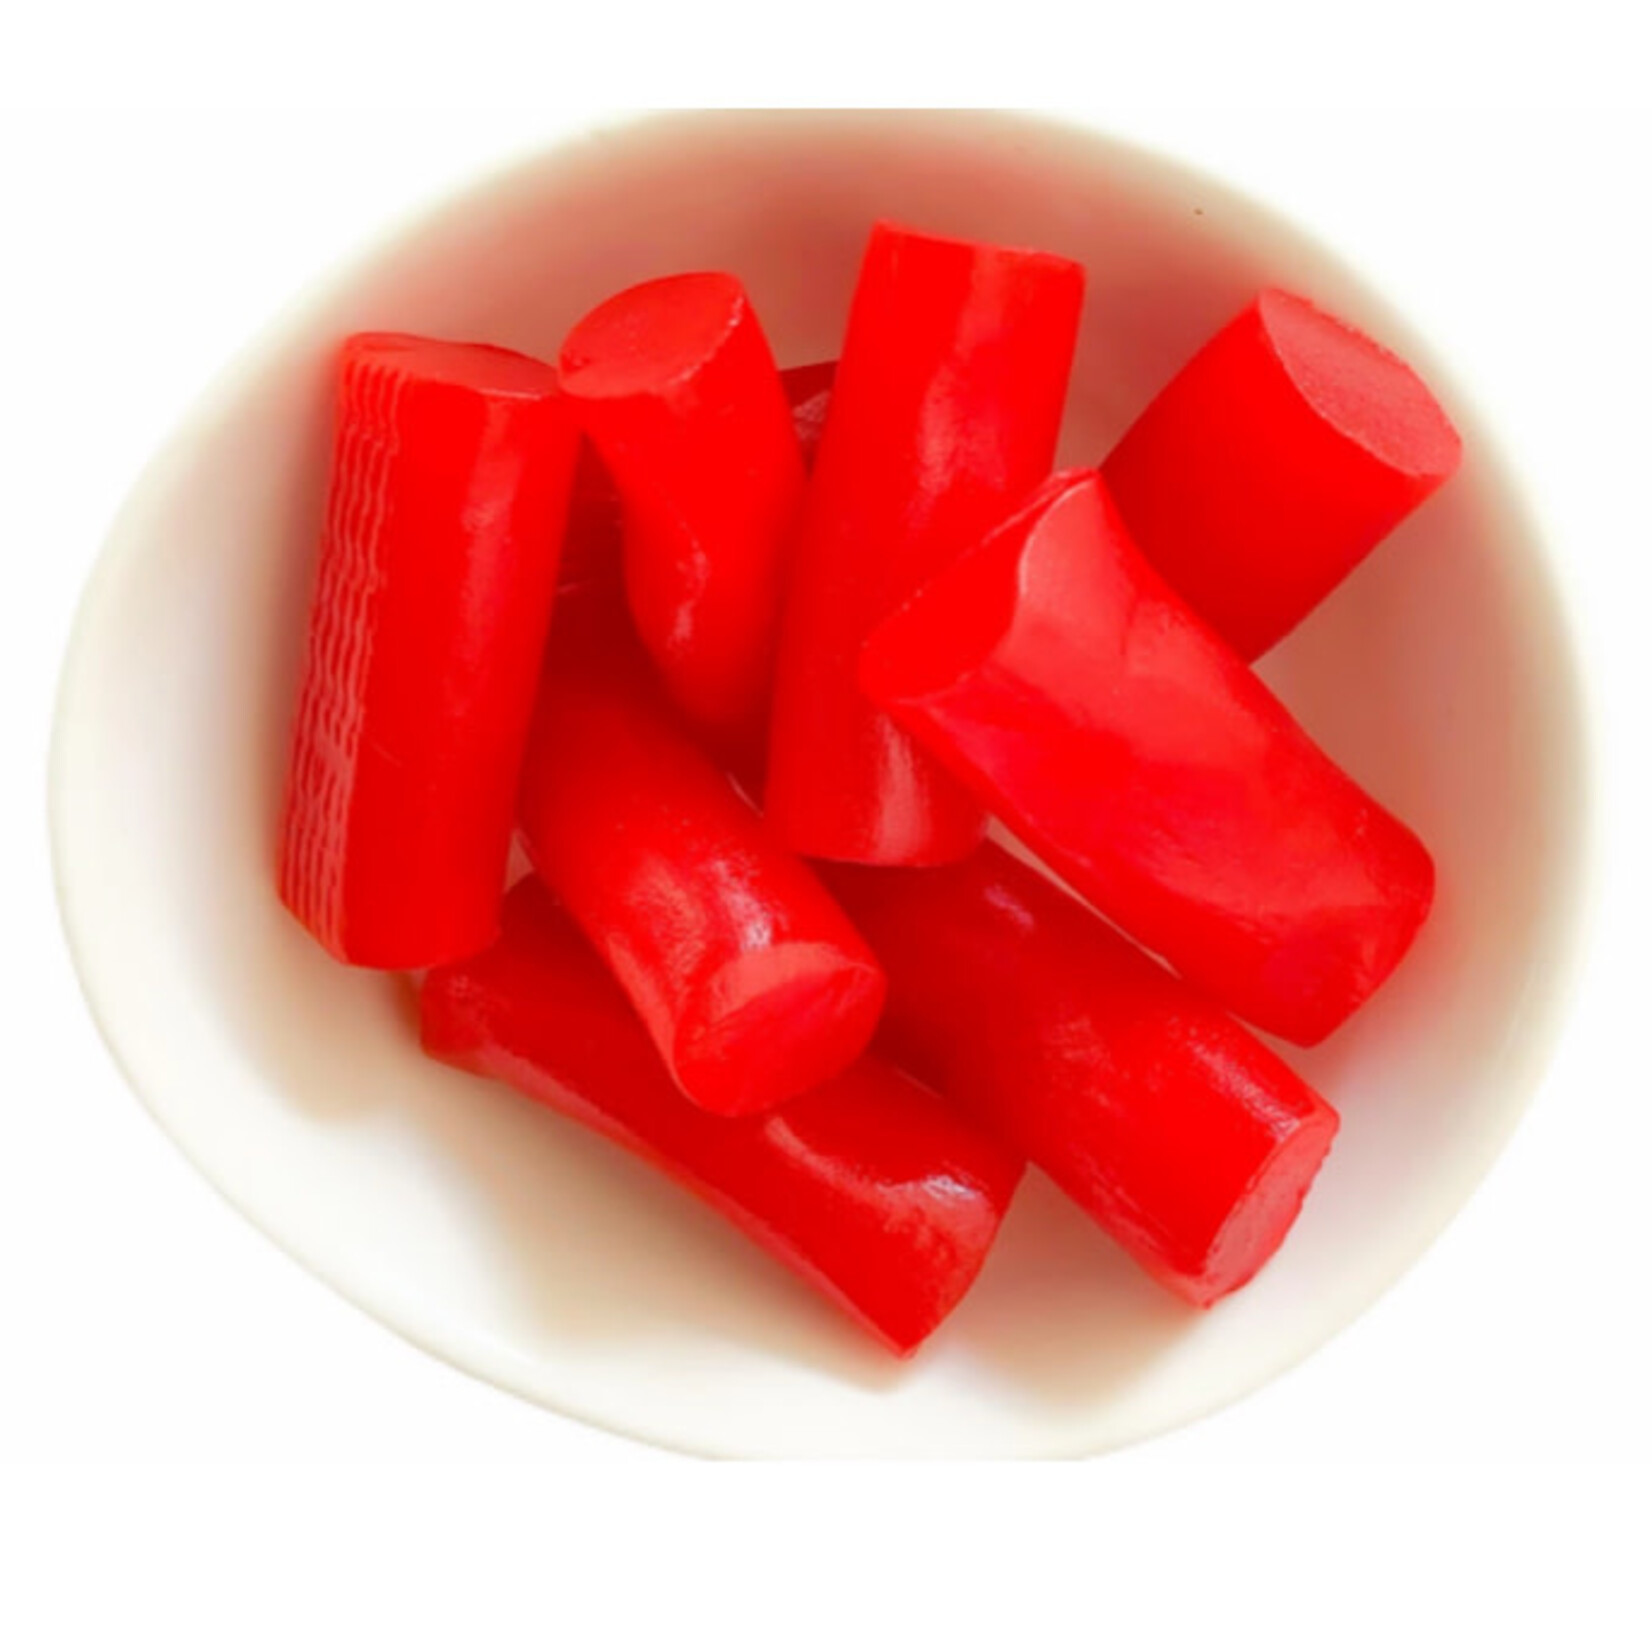 MC Strawberry Licorice bites 375g